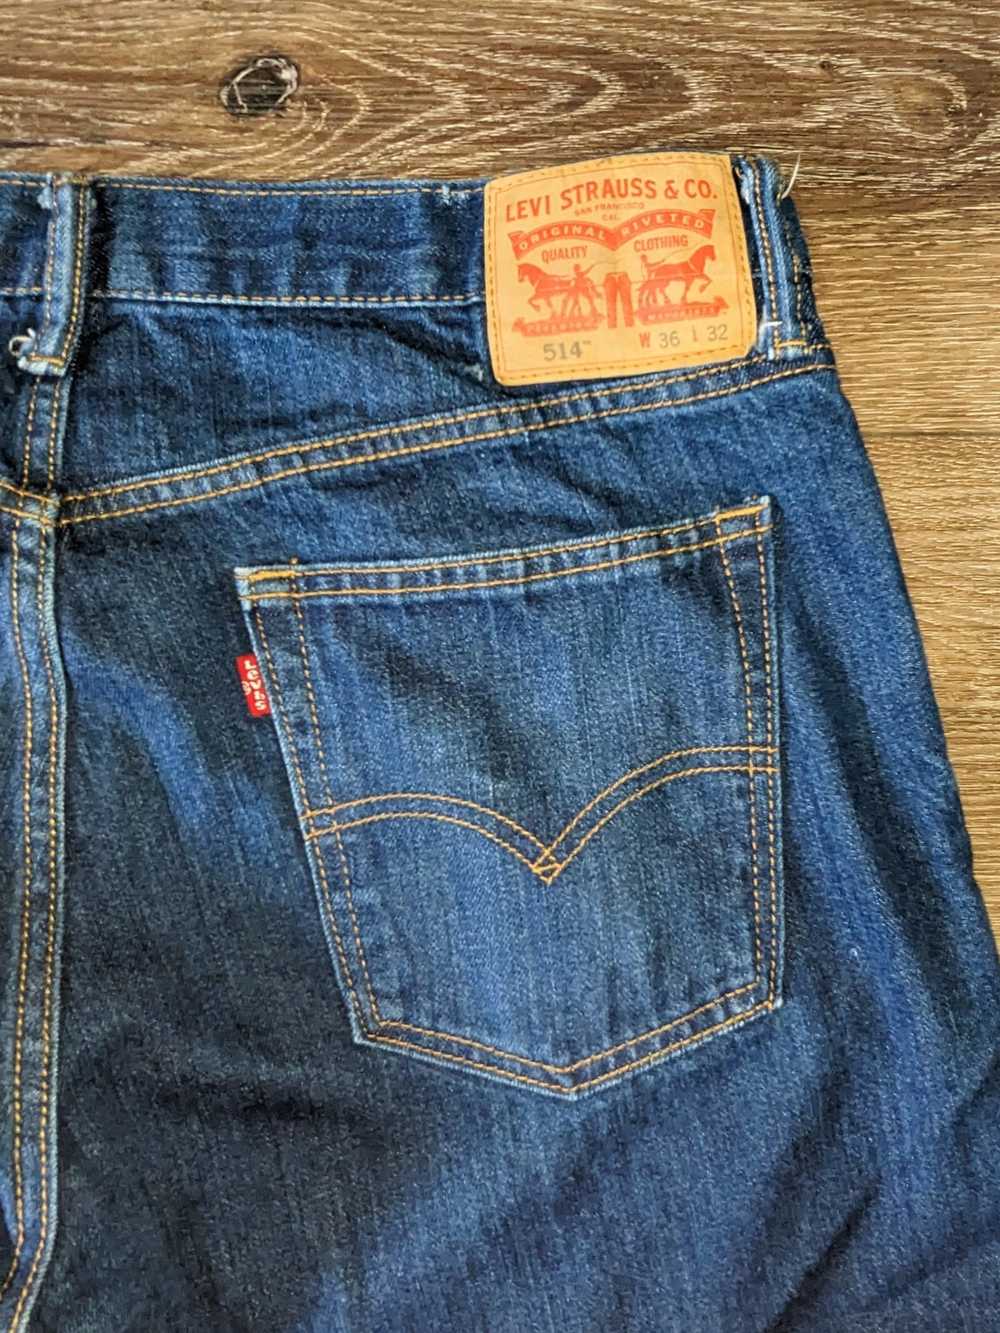 Levi's Levi's 514 straight fit jeans - SIZE 36 x … - image 5